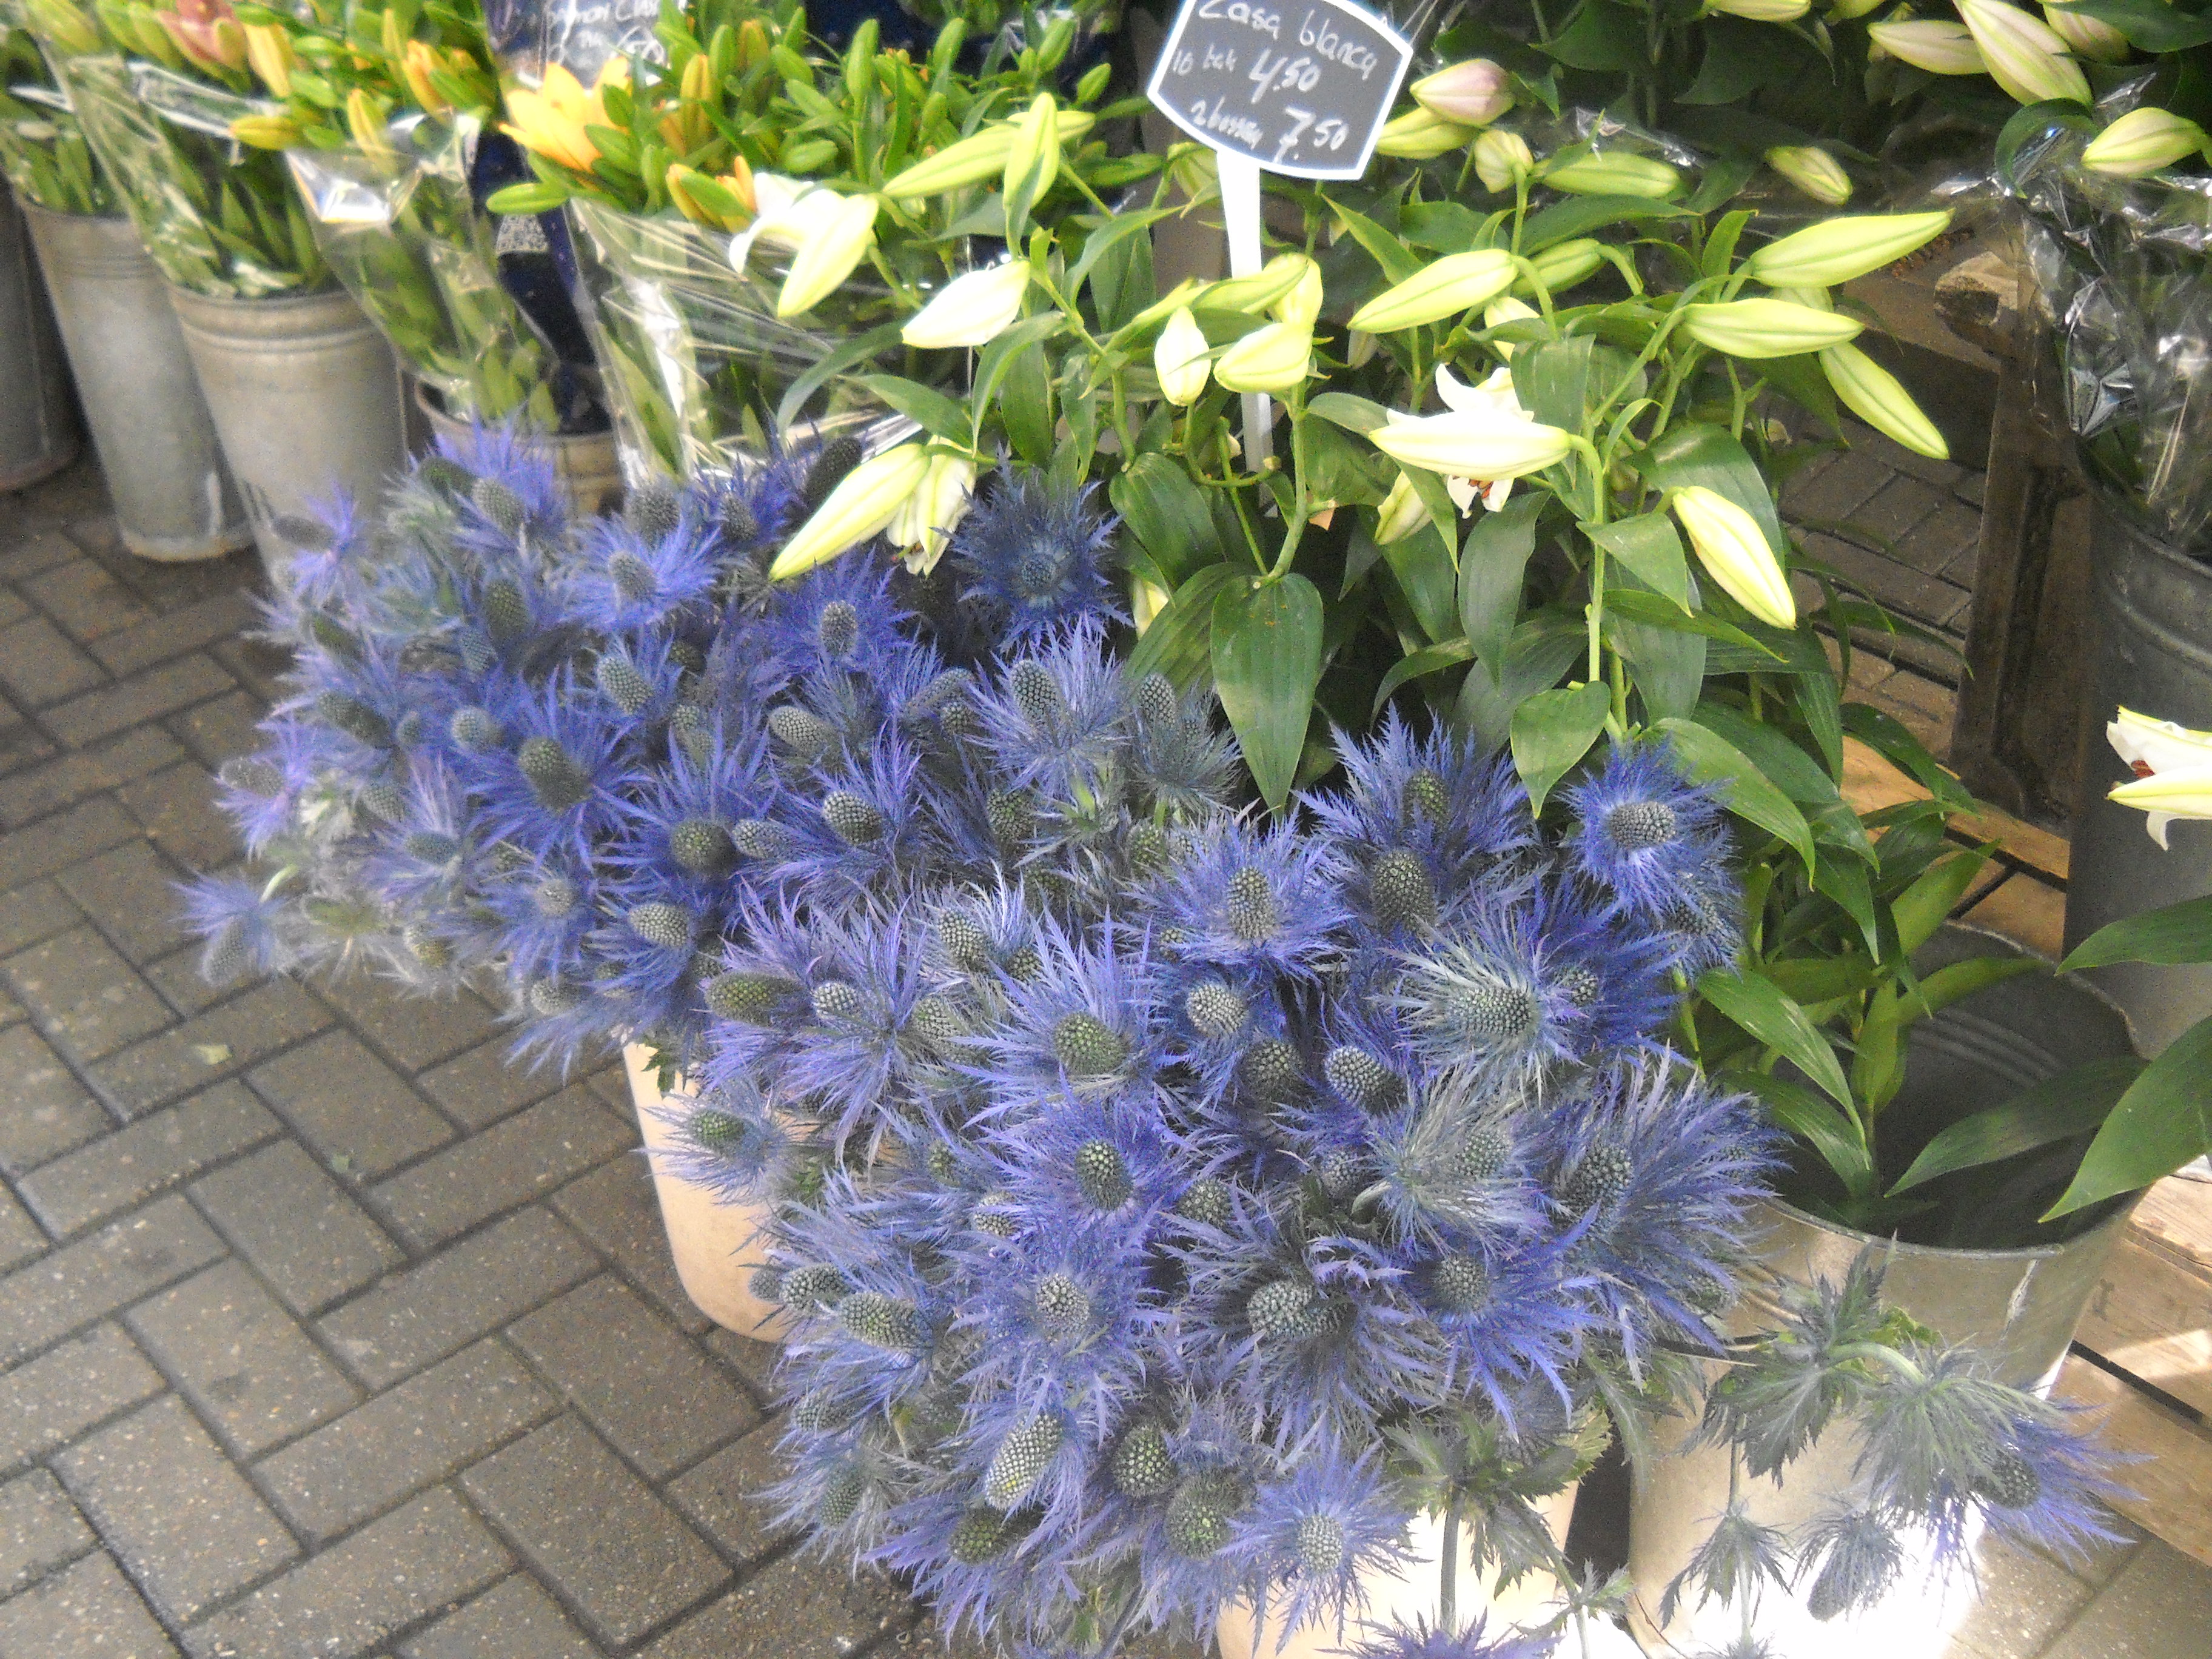 Amsterdam - Flower market